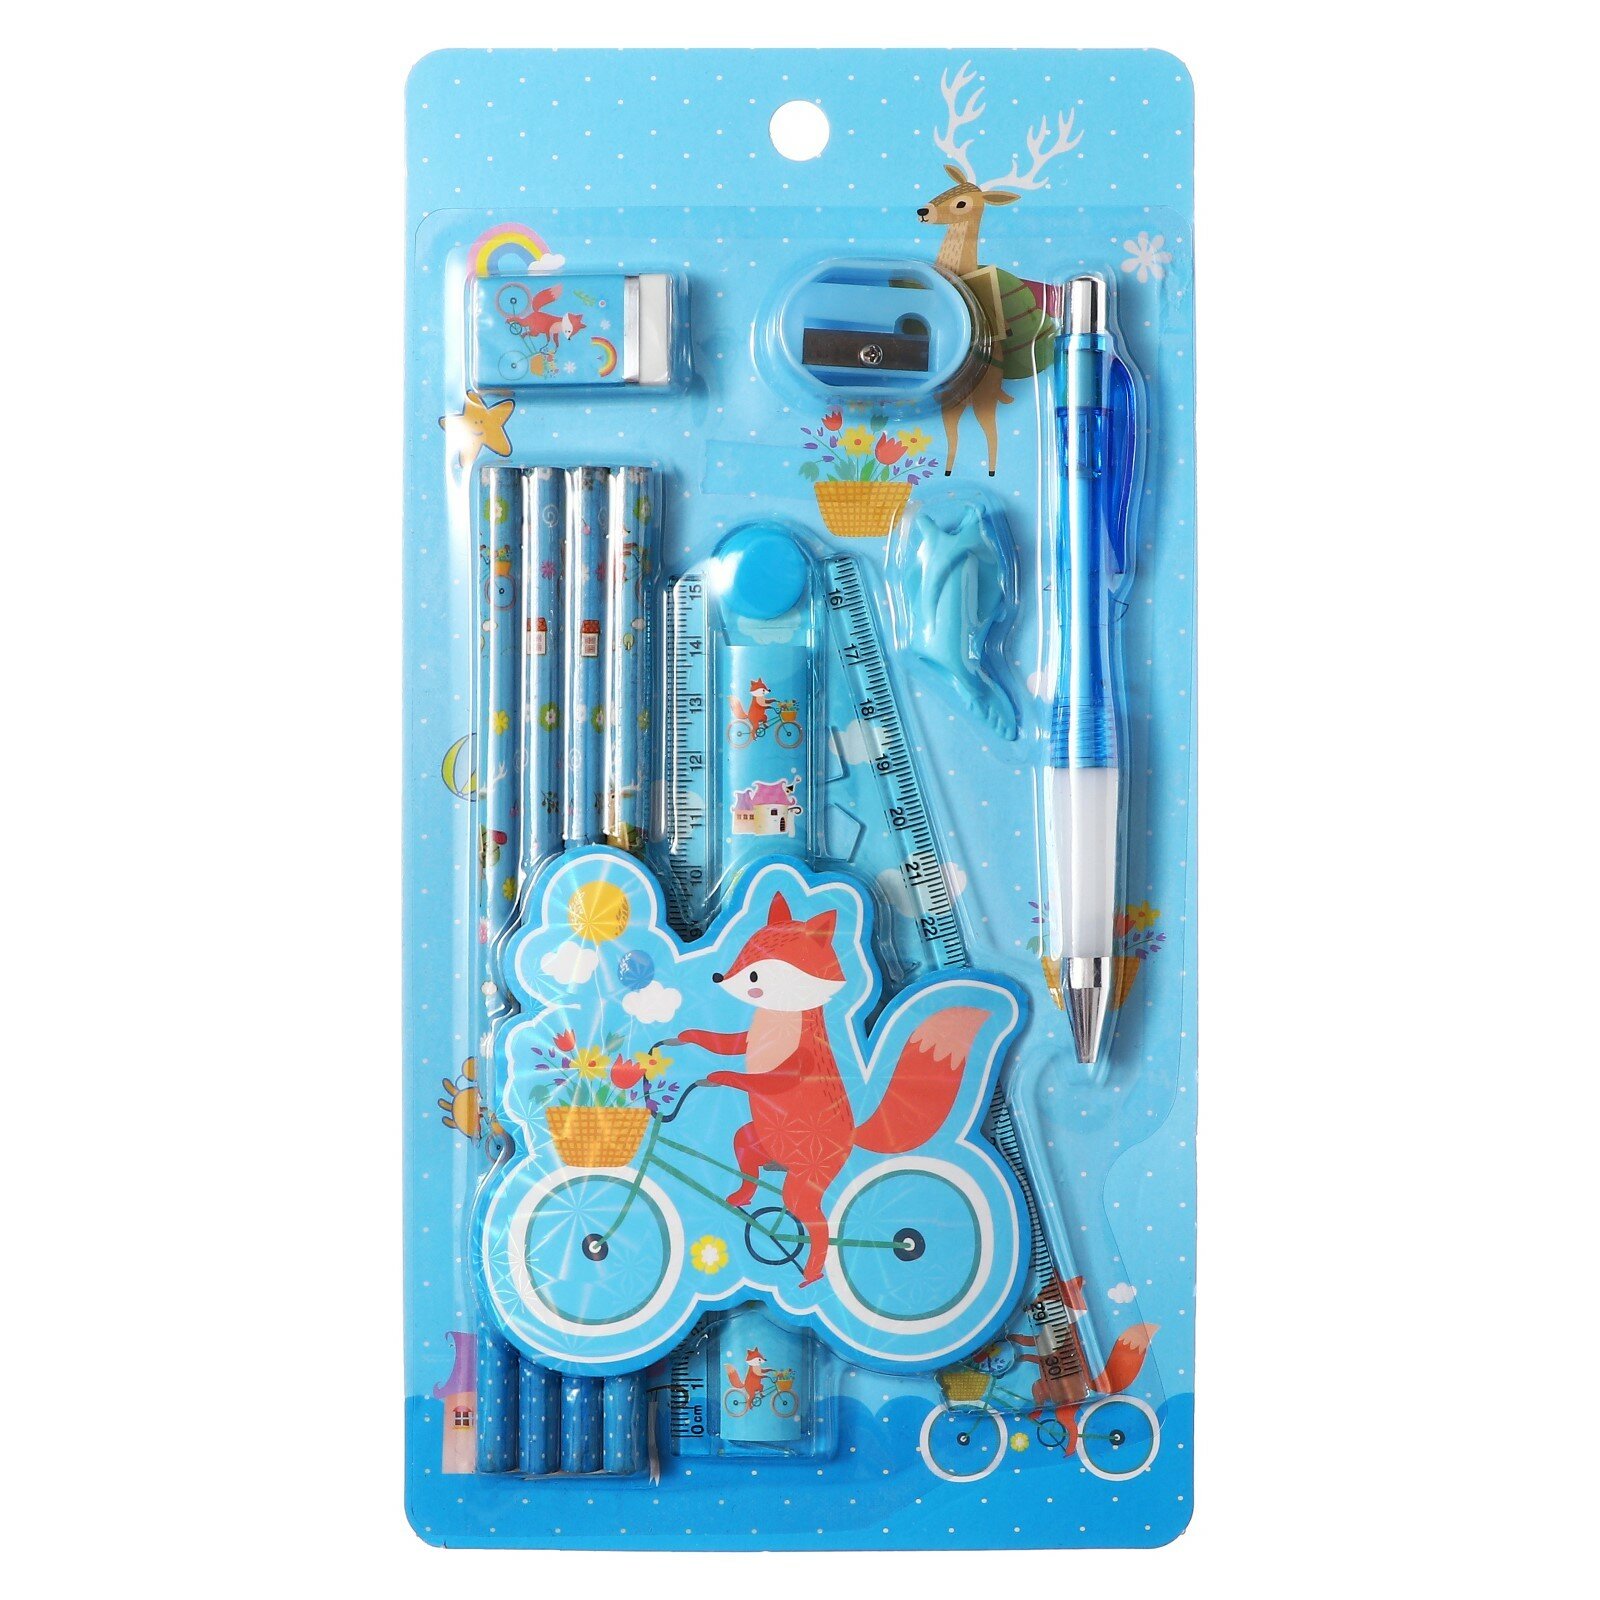 Набор канцелярский, 4 чгр карандаша, точилка, ластик, линейка, ручка, насадка-тренажер, голубой